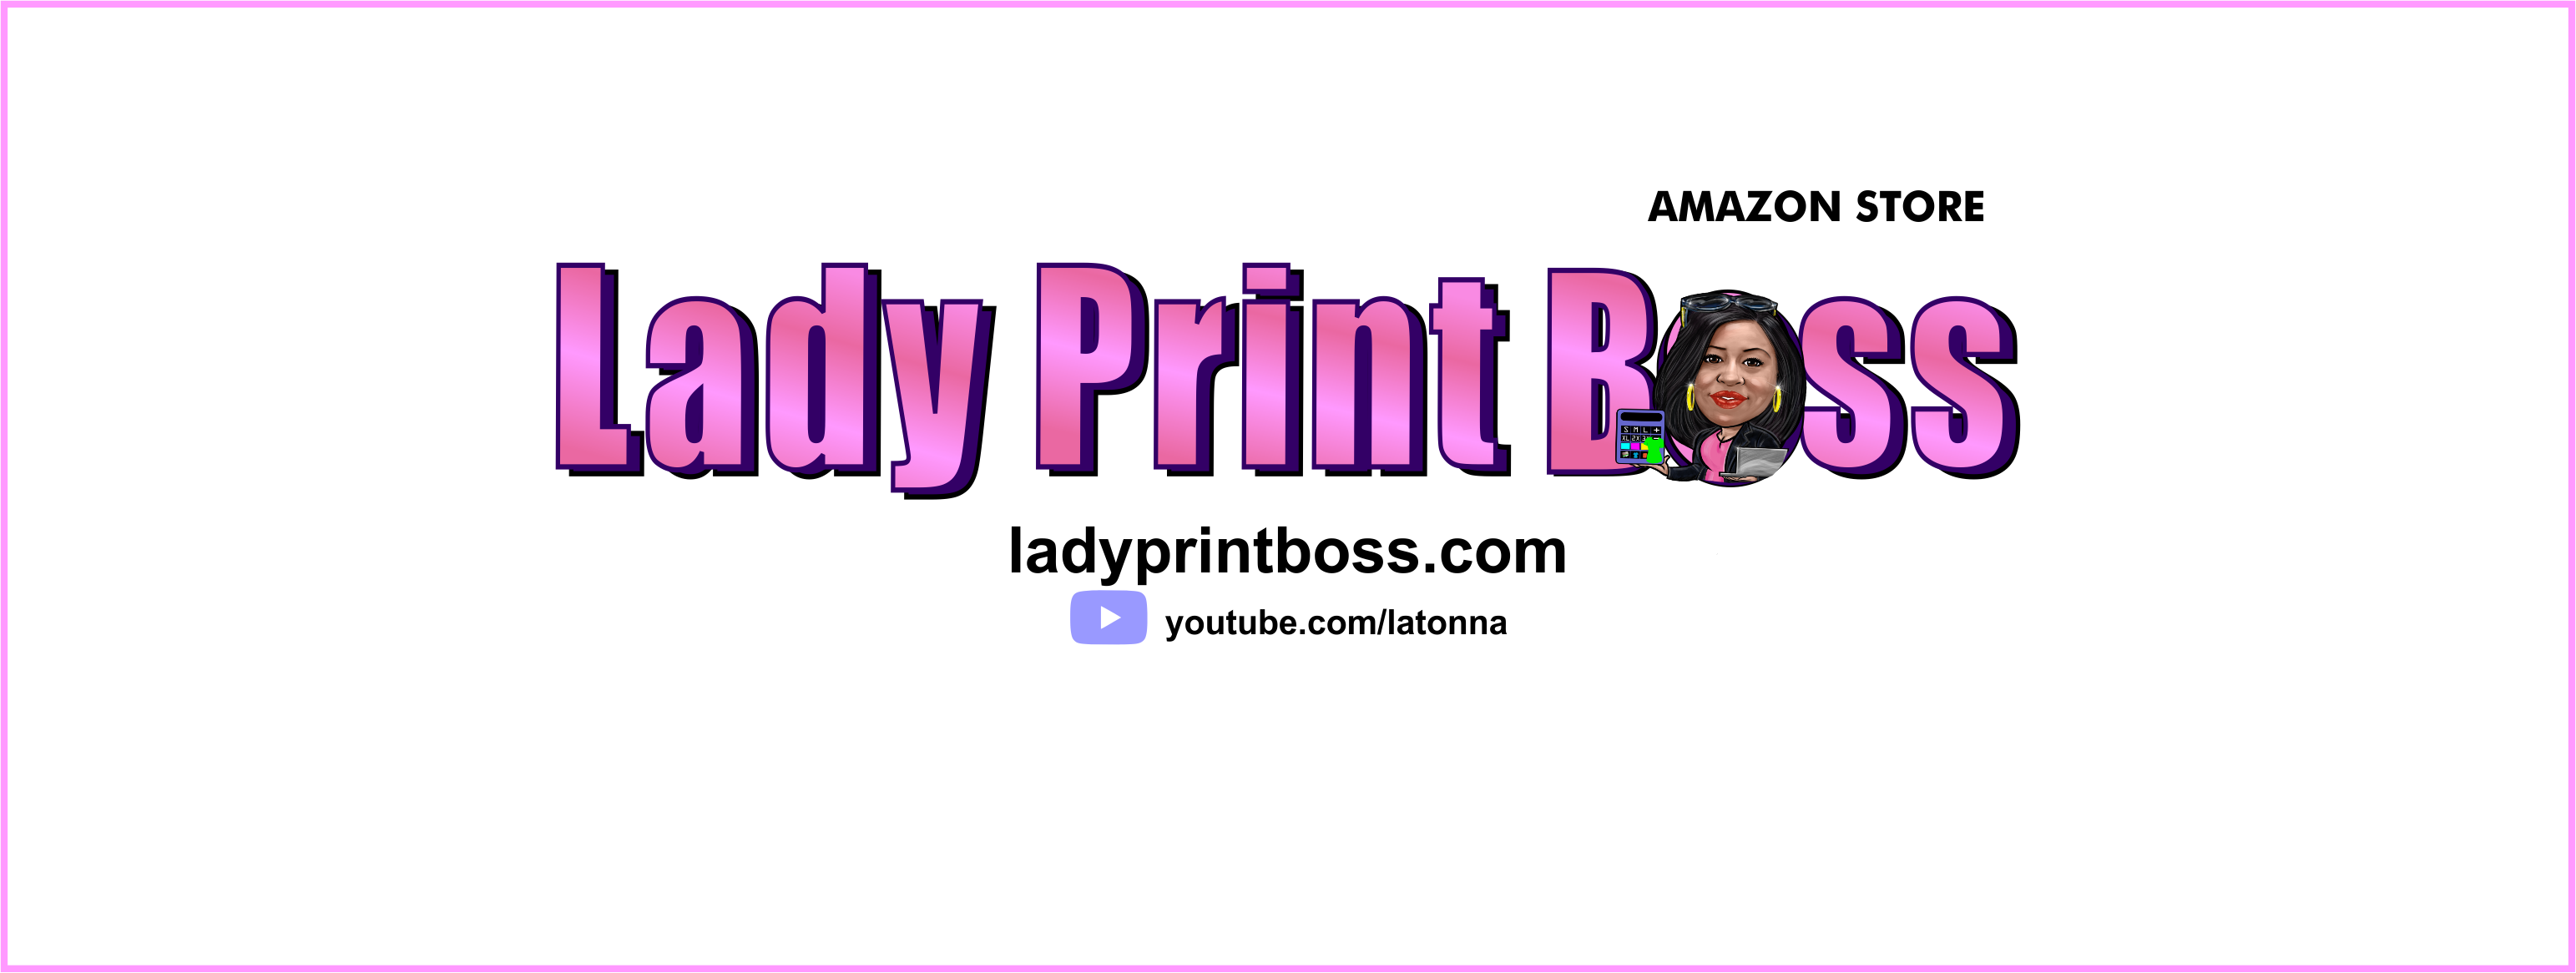 Lady Print Boss